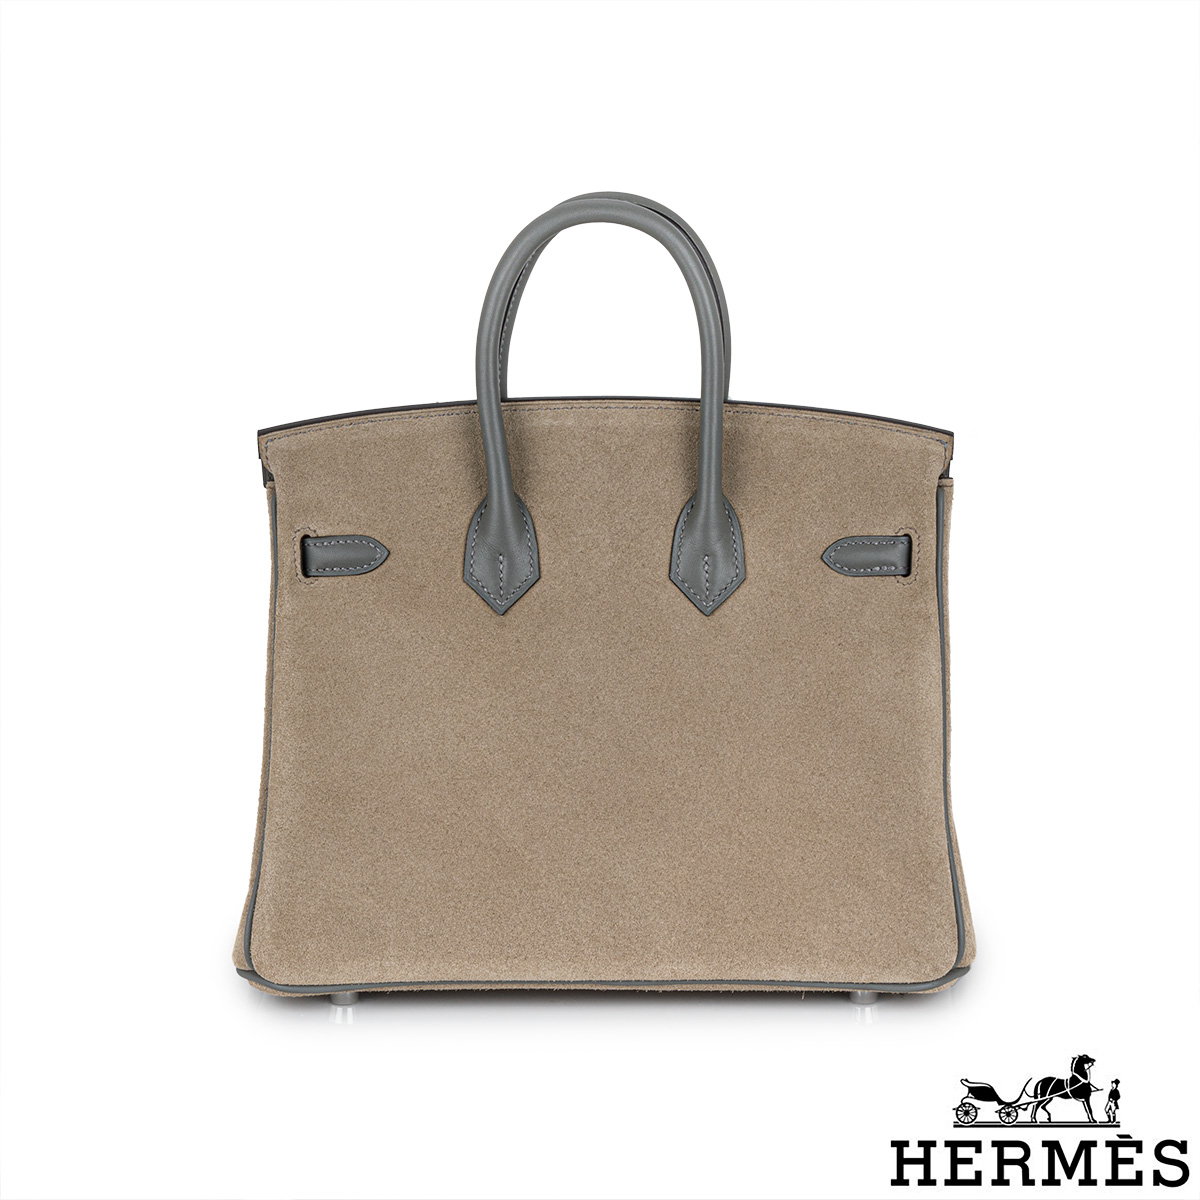 Hermes Birkin Handbag Grey Doblis Suede with Swift with